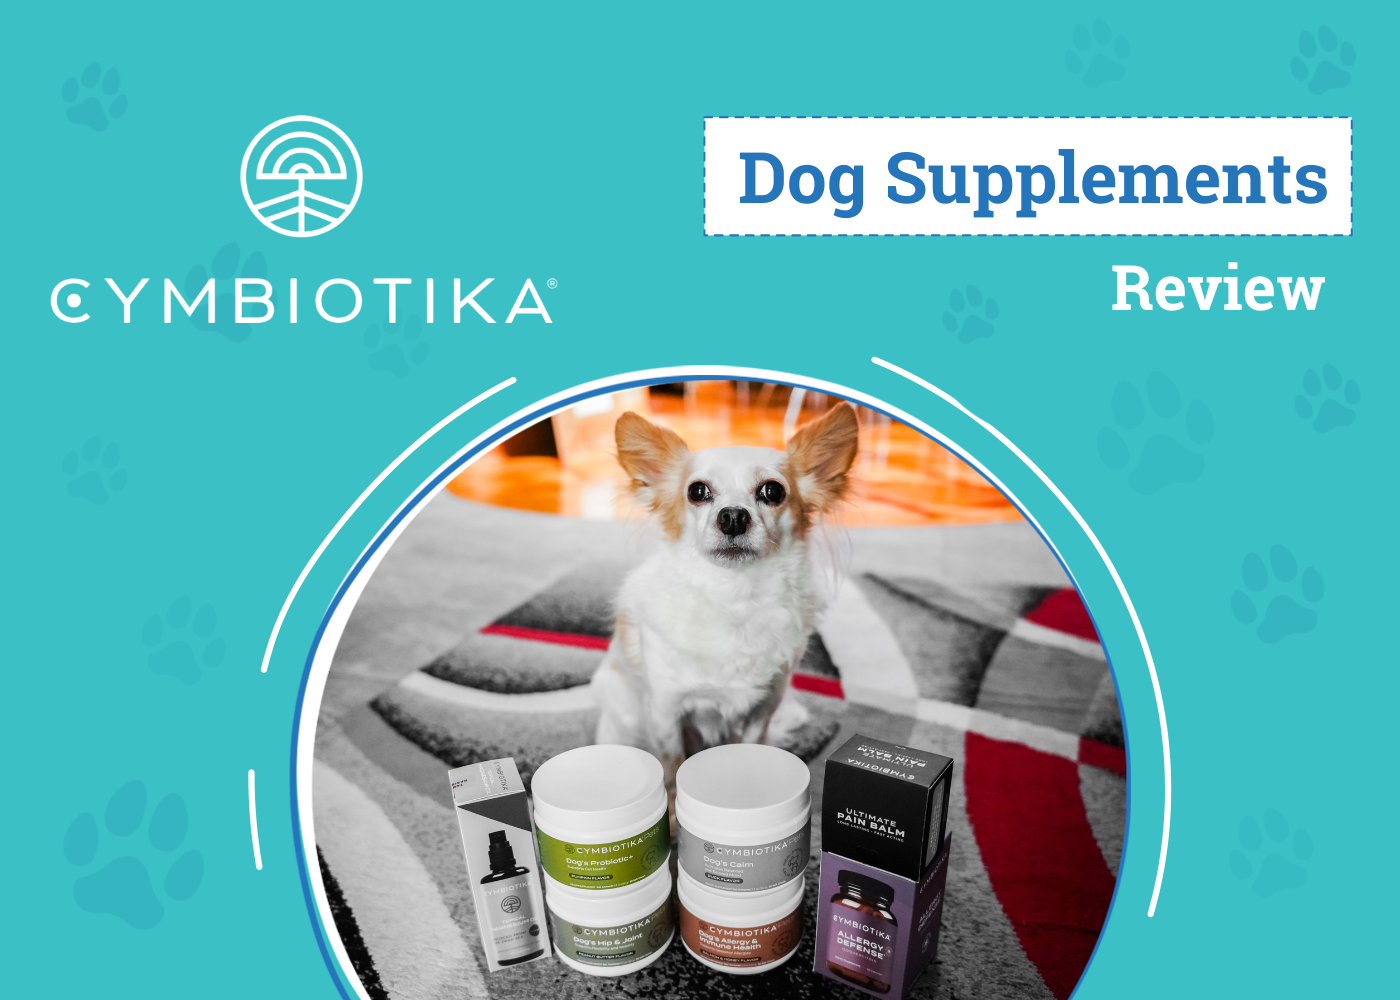 DOG_SAPR_Cymbiotika Dog Supplements